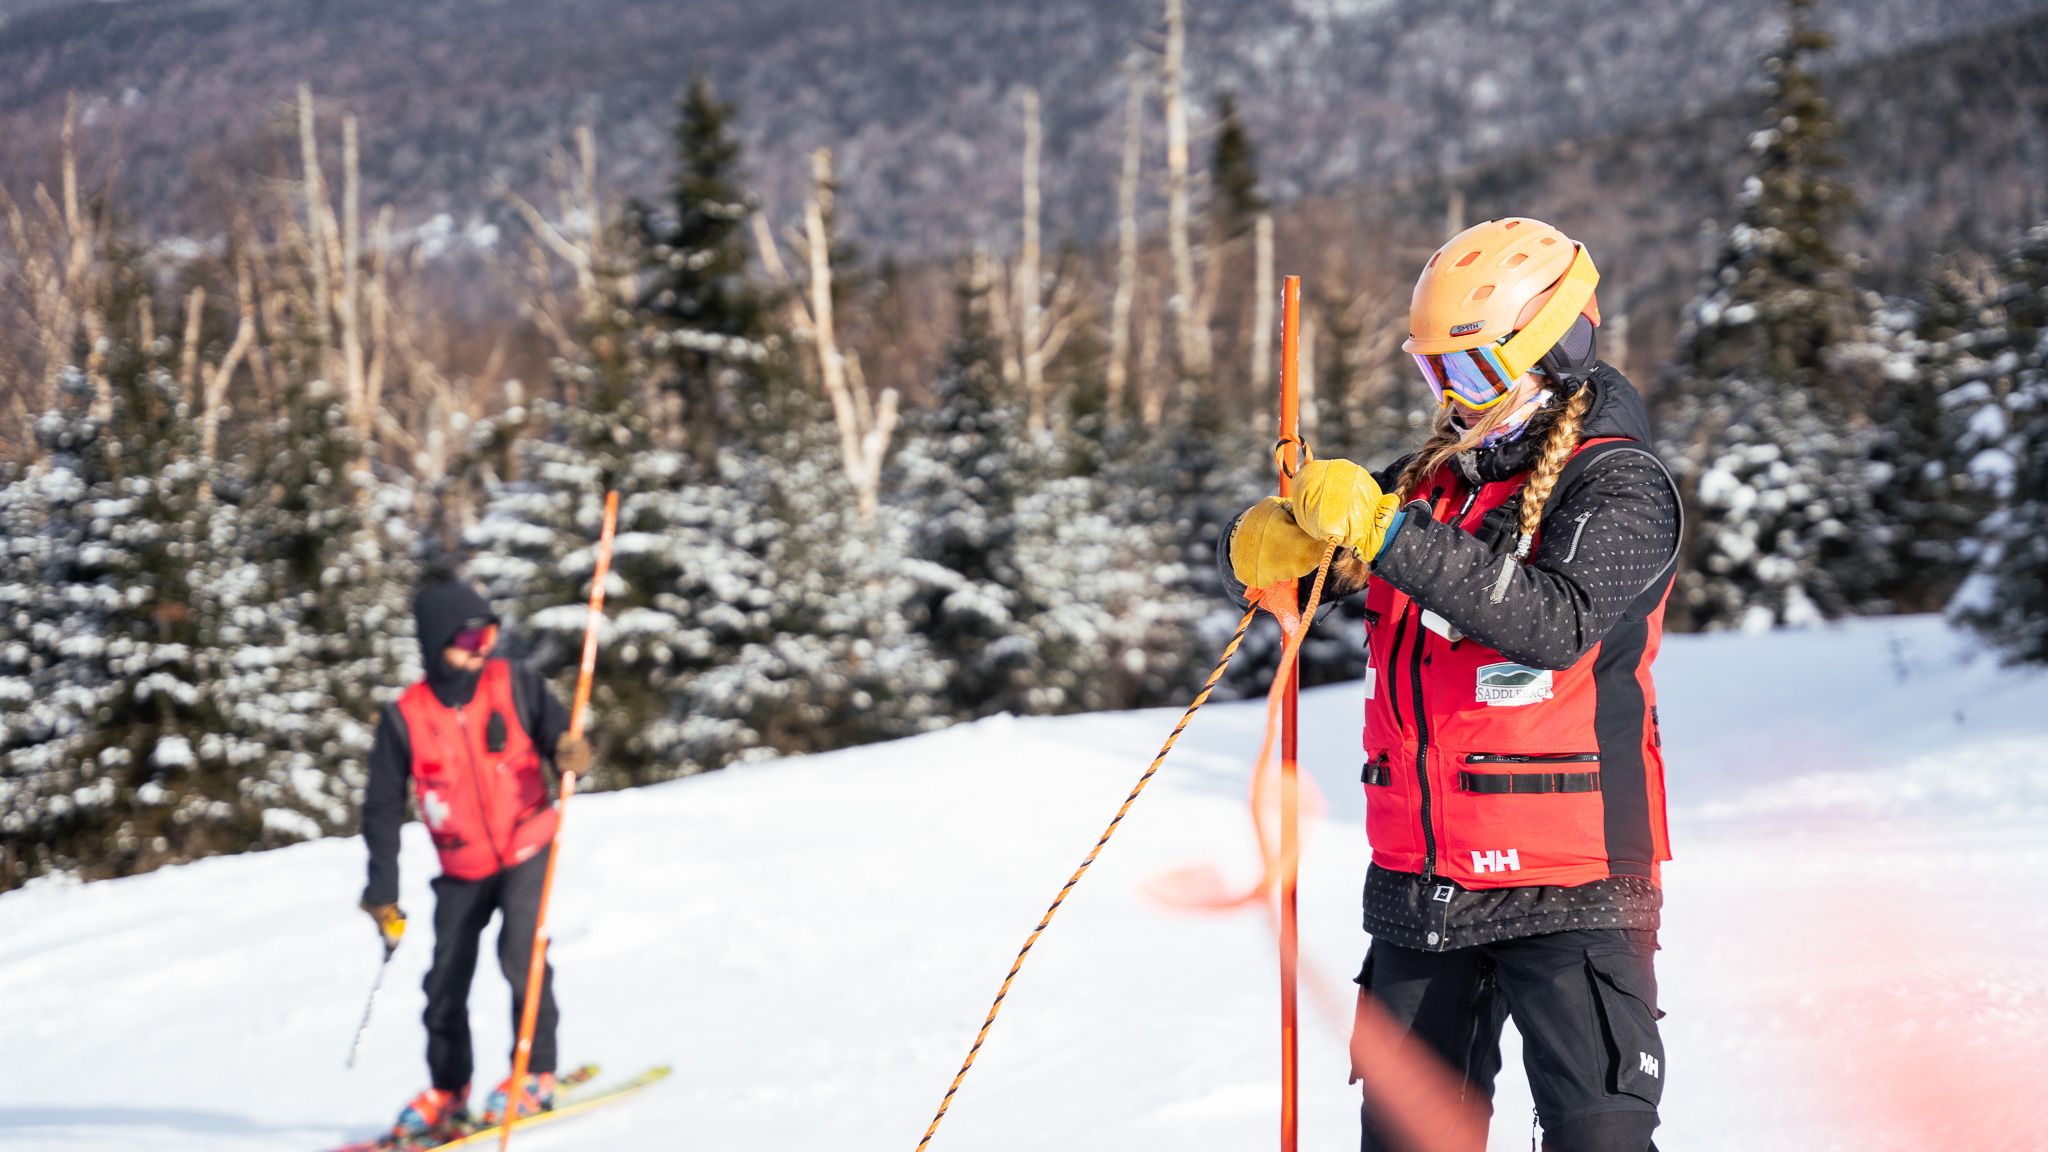 Saddleback Ski Patrol setting ropes